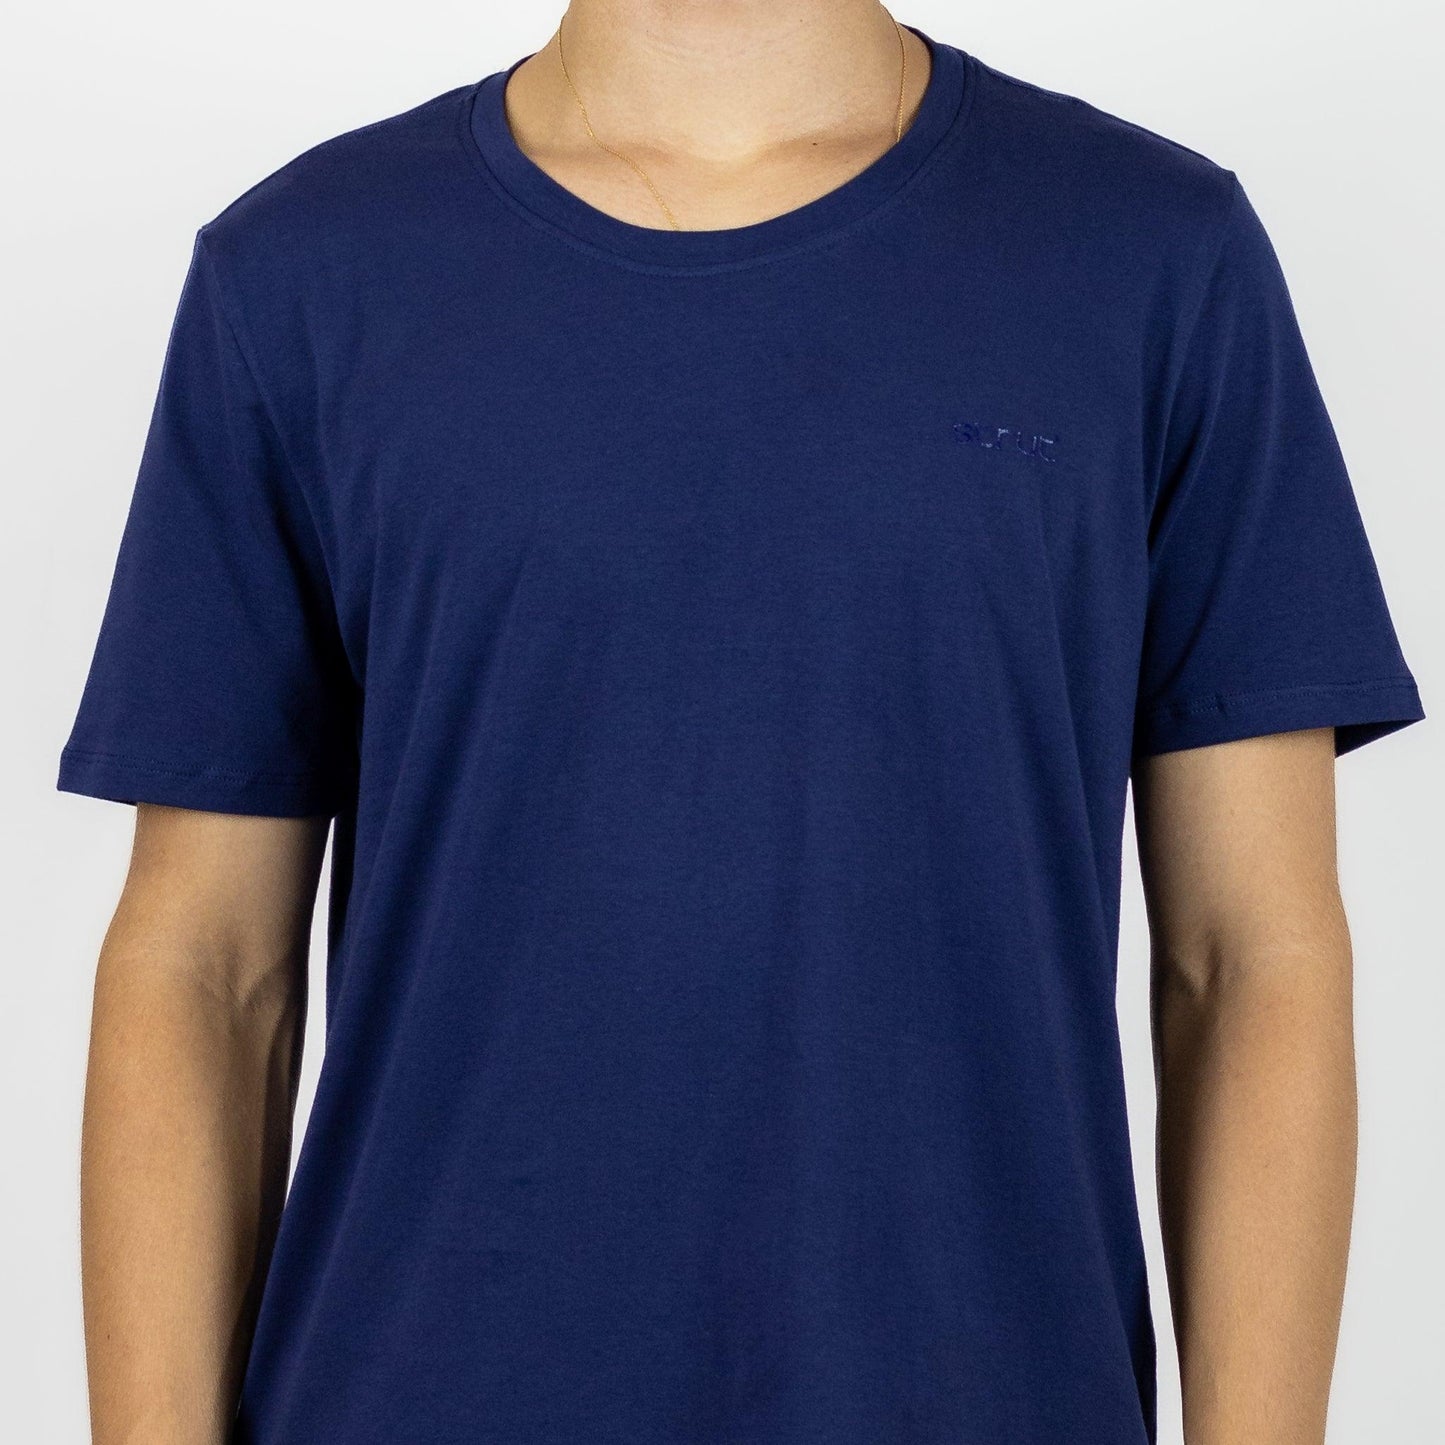 Camiseta Básica Strut Gola Careca Azul Marinho - Strut